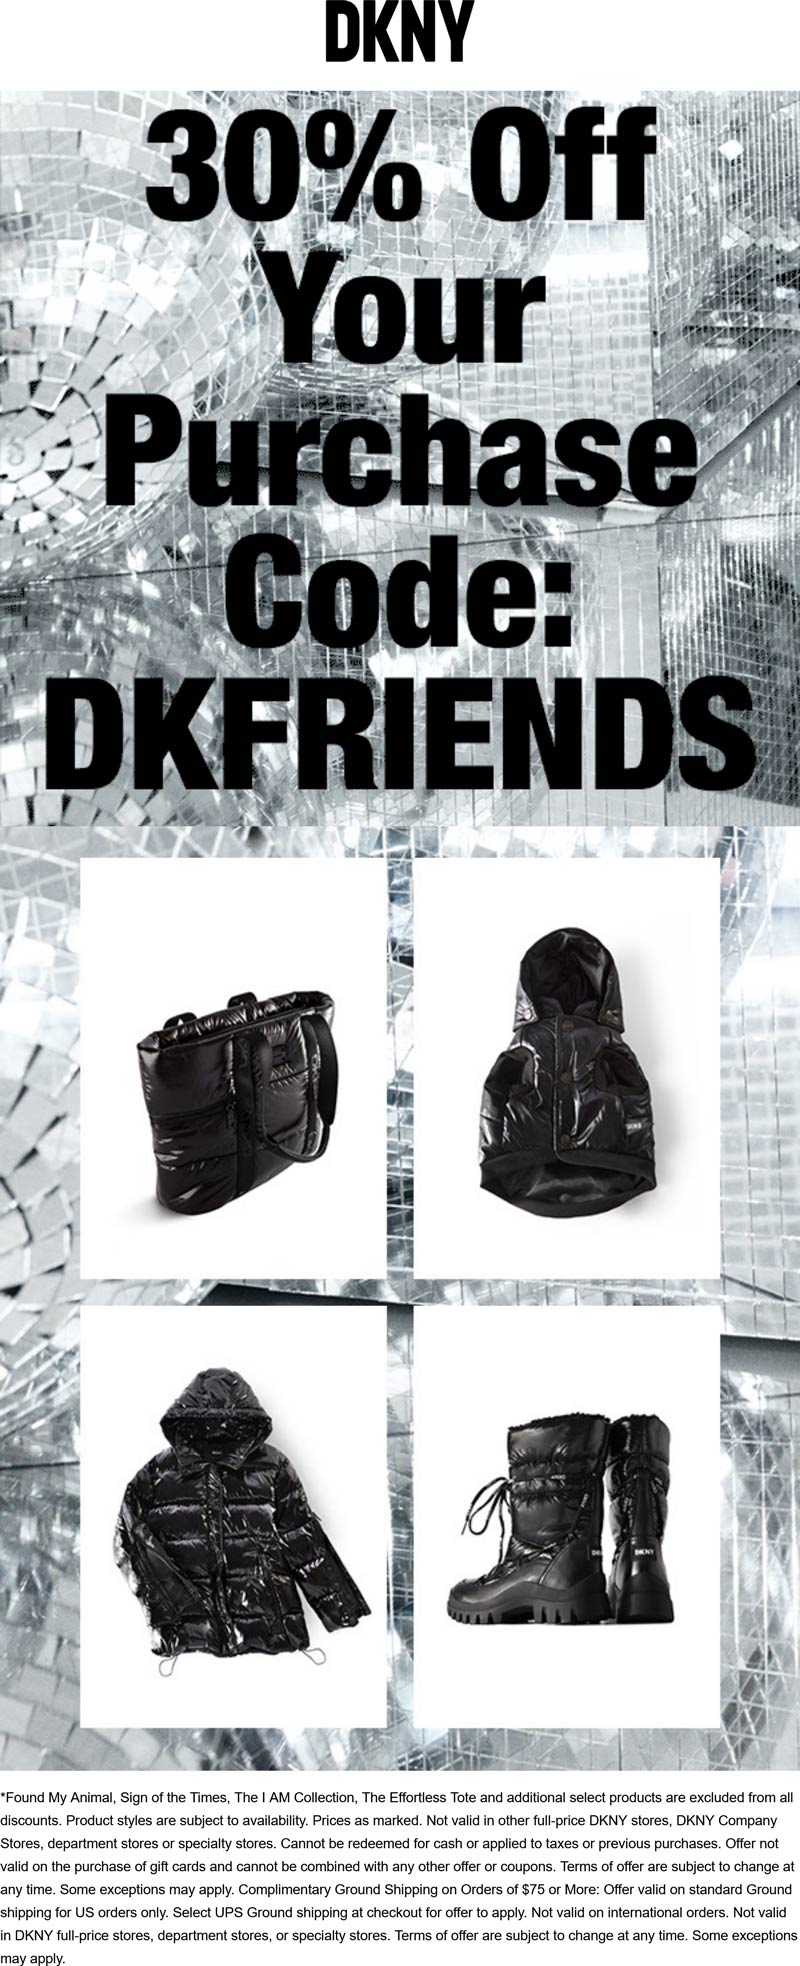 DKNY stores Coupon  30% off at DKNY via promo code DKFRIENDS #dkny 